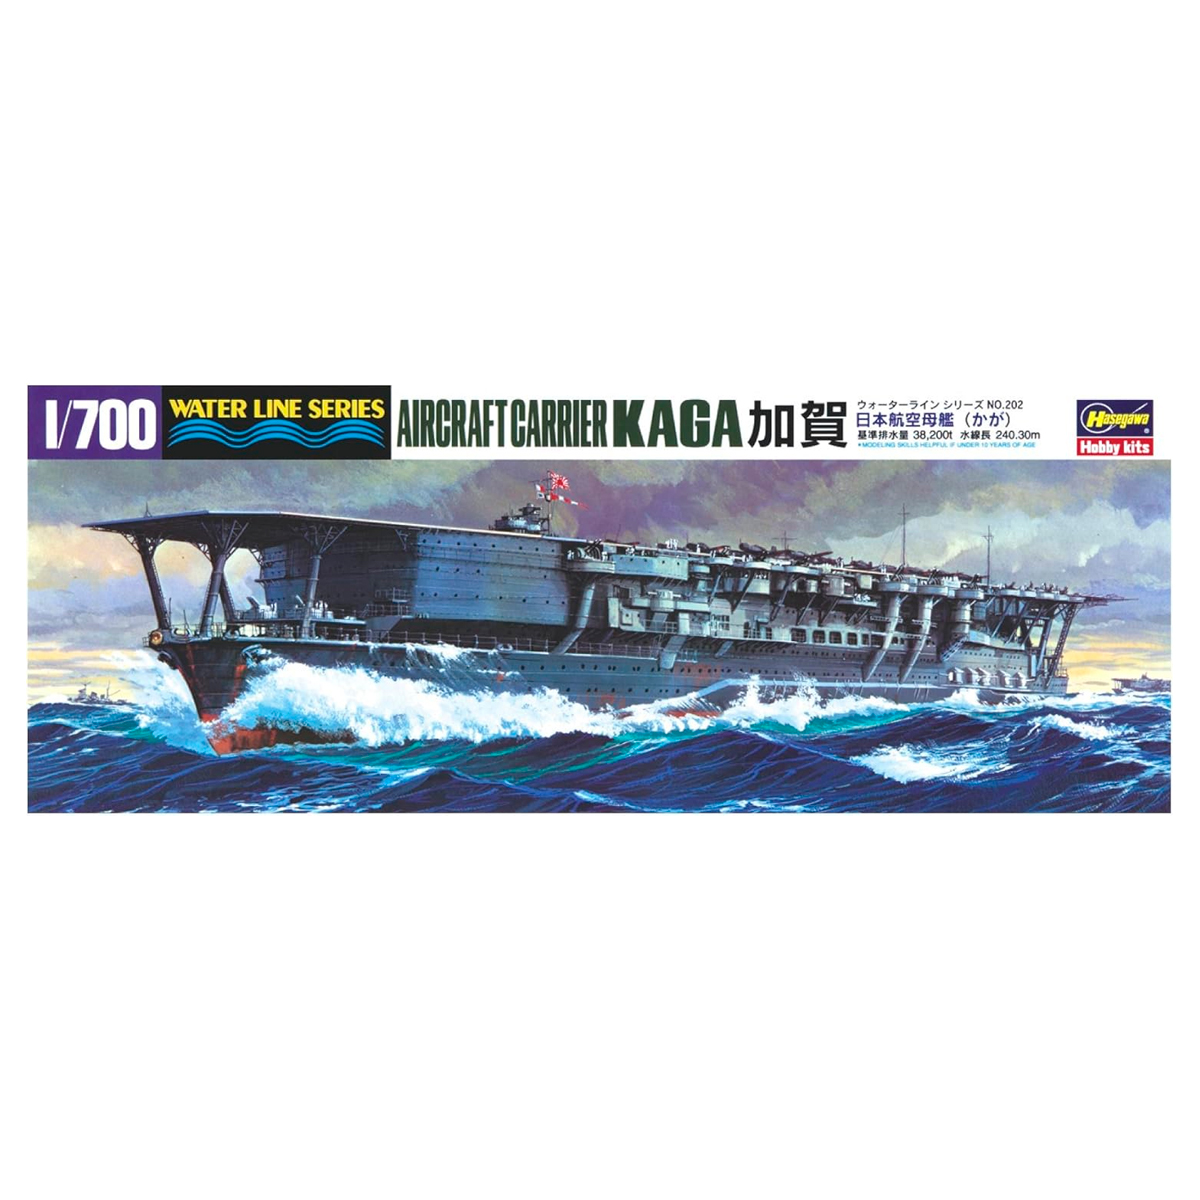 WL202-49202 1/700 Battleship Kaga